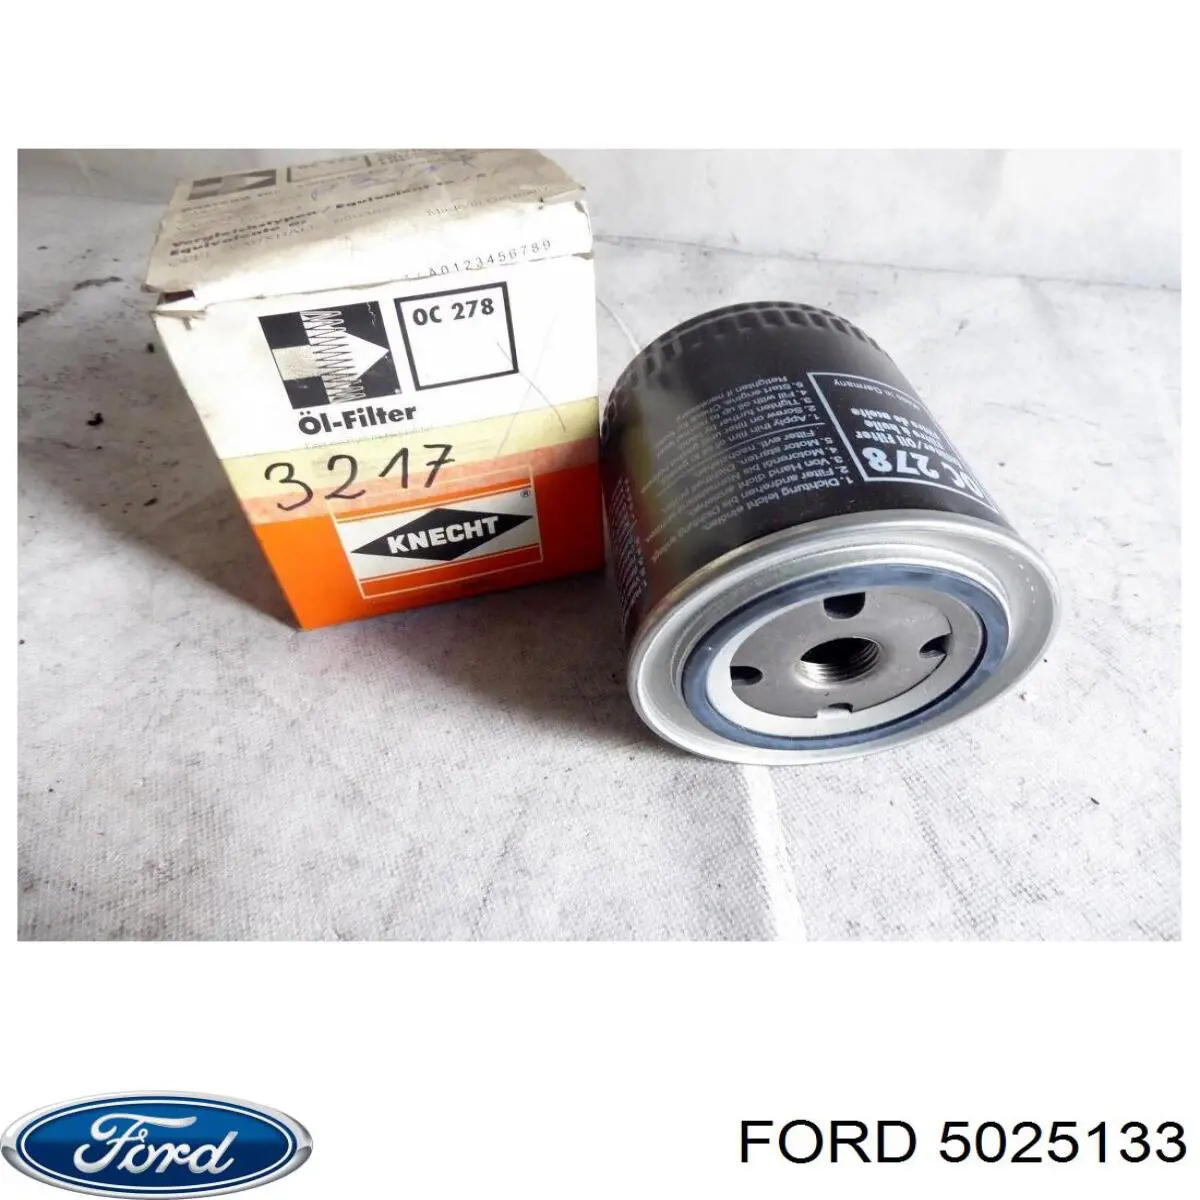 5025133 Ford filtro de aceite